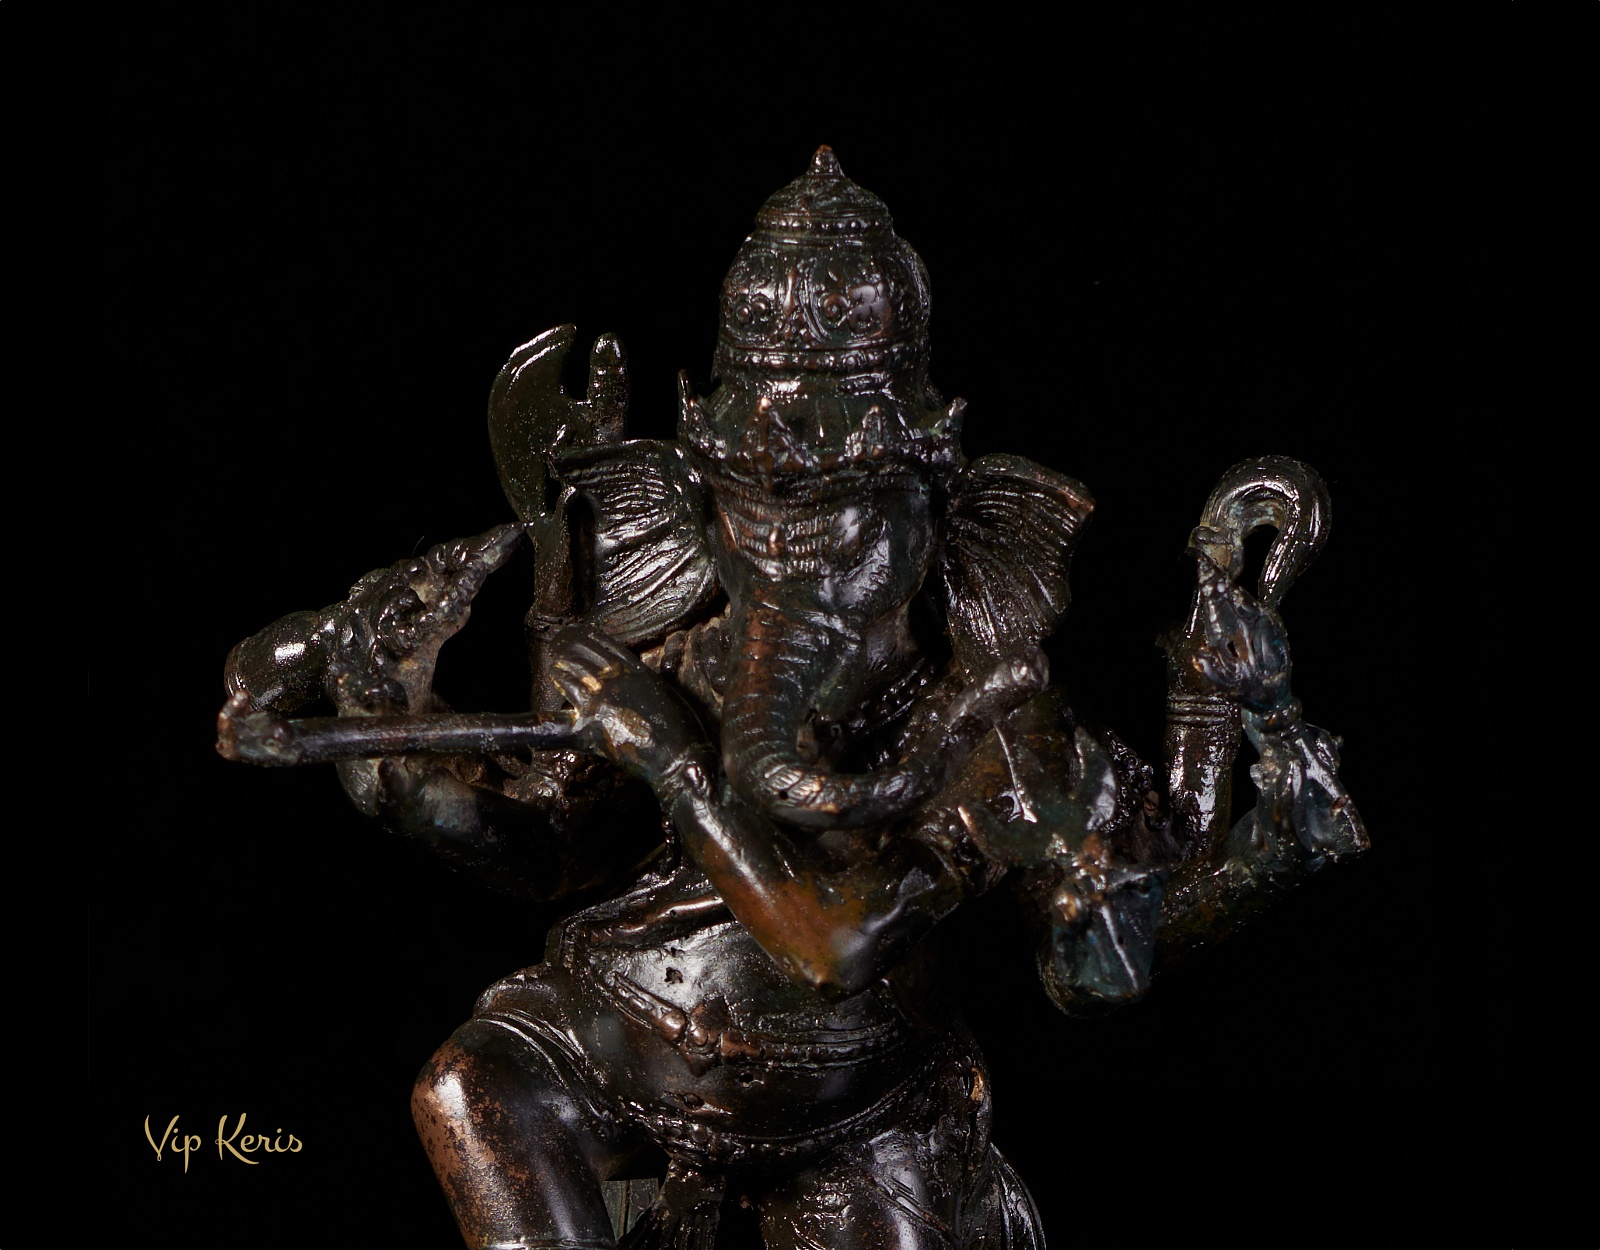 Старинная статуя танцующего Ганеши с флейтой, 30см фото VipKeris